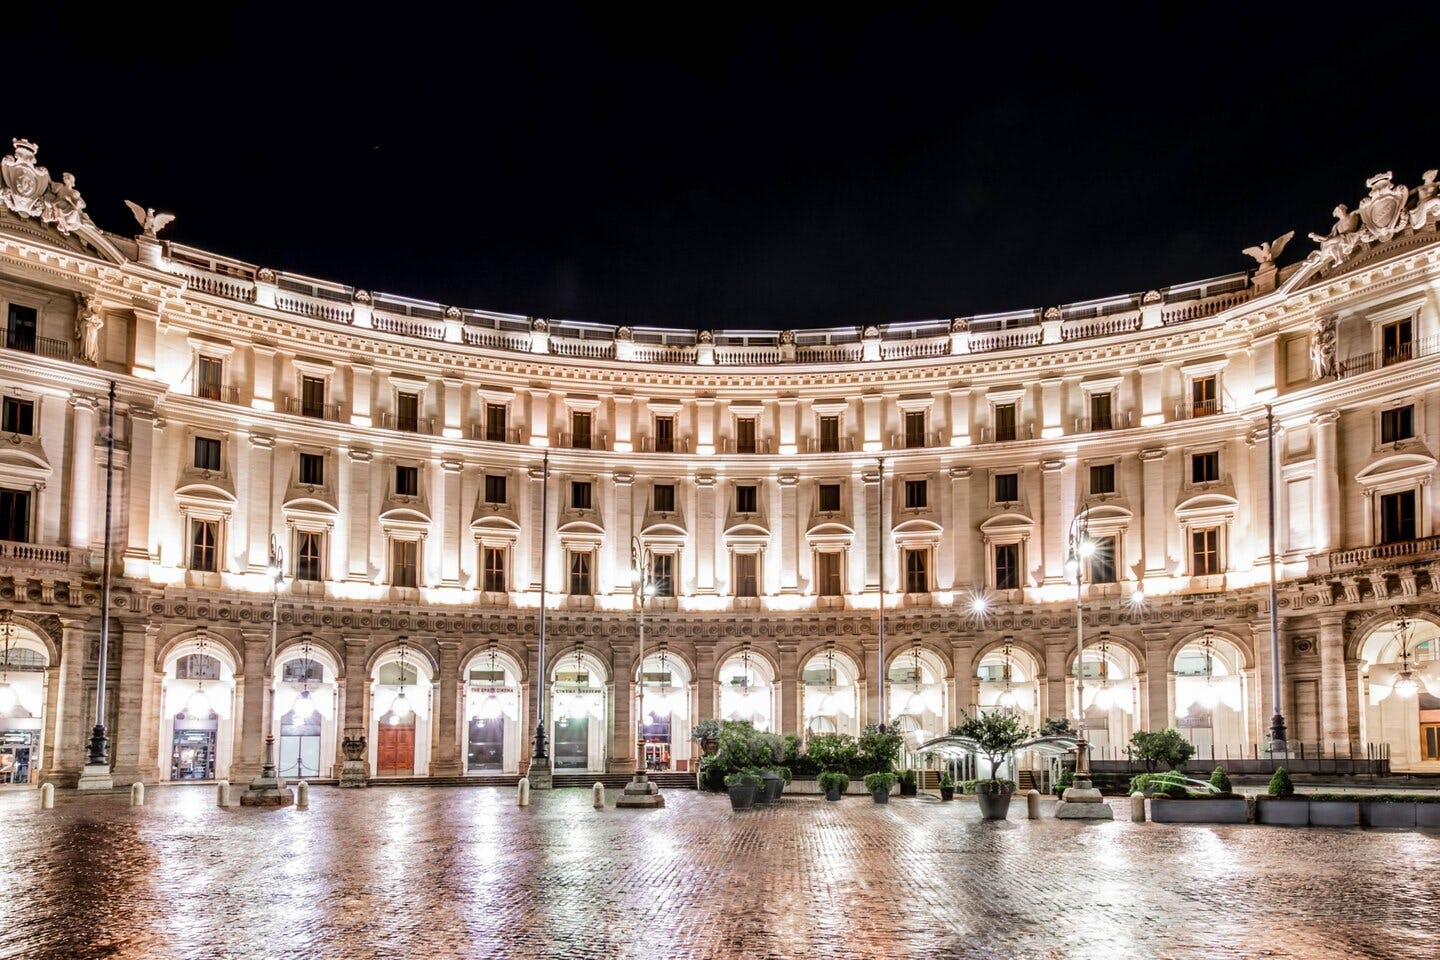 Palazzo Naiadi in Rome